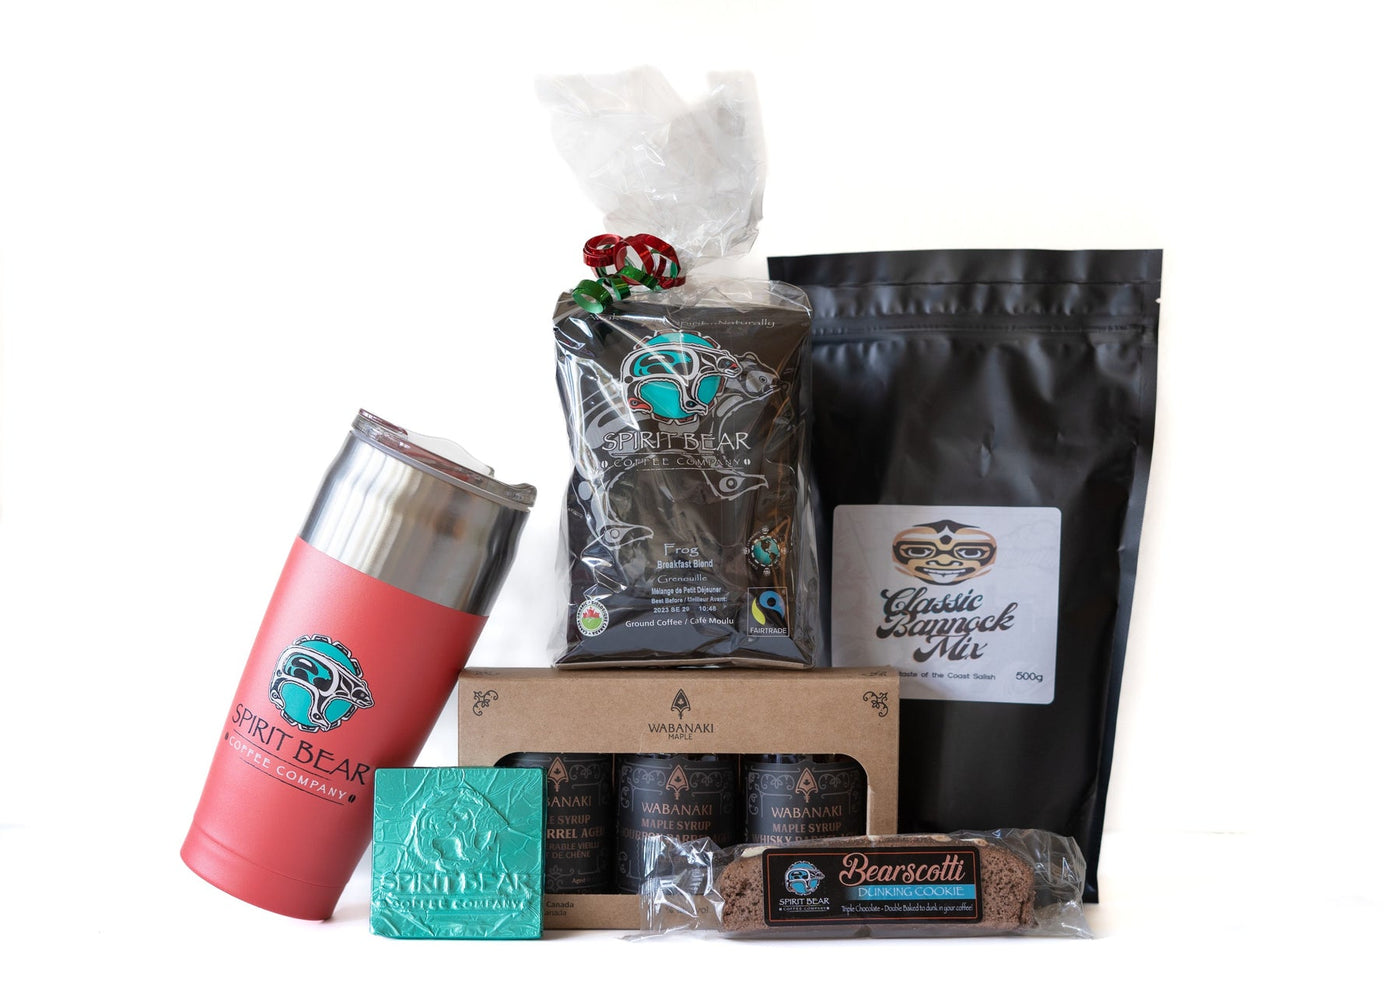 Spirit Bear Coffee's Bear Bundle of coffee products